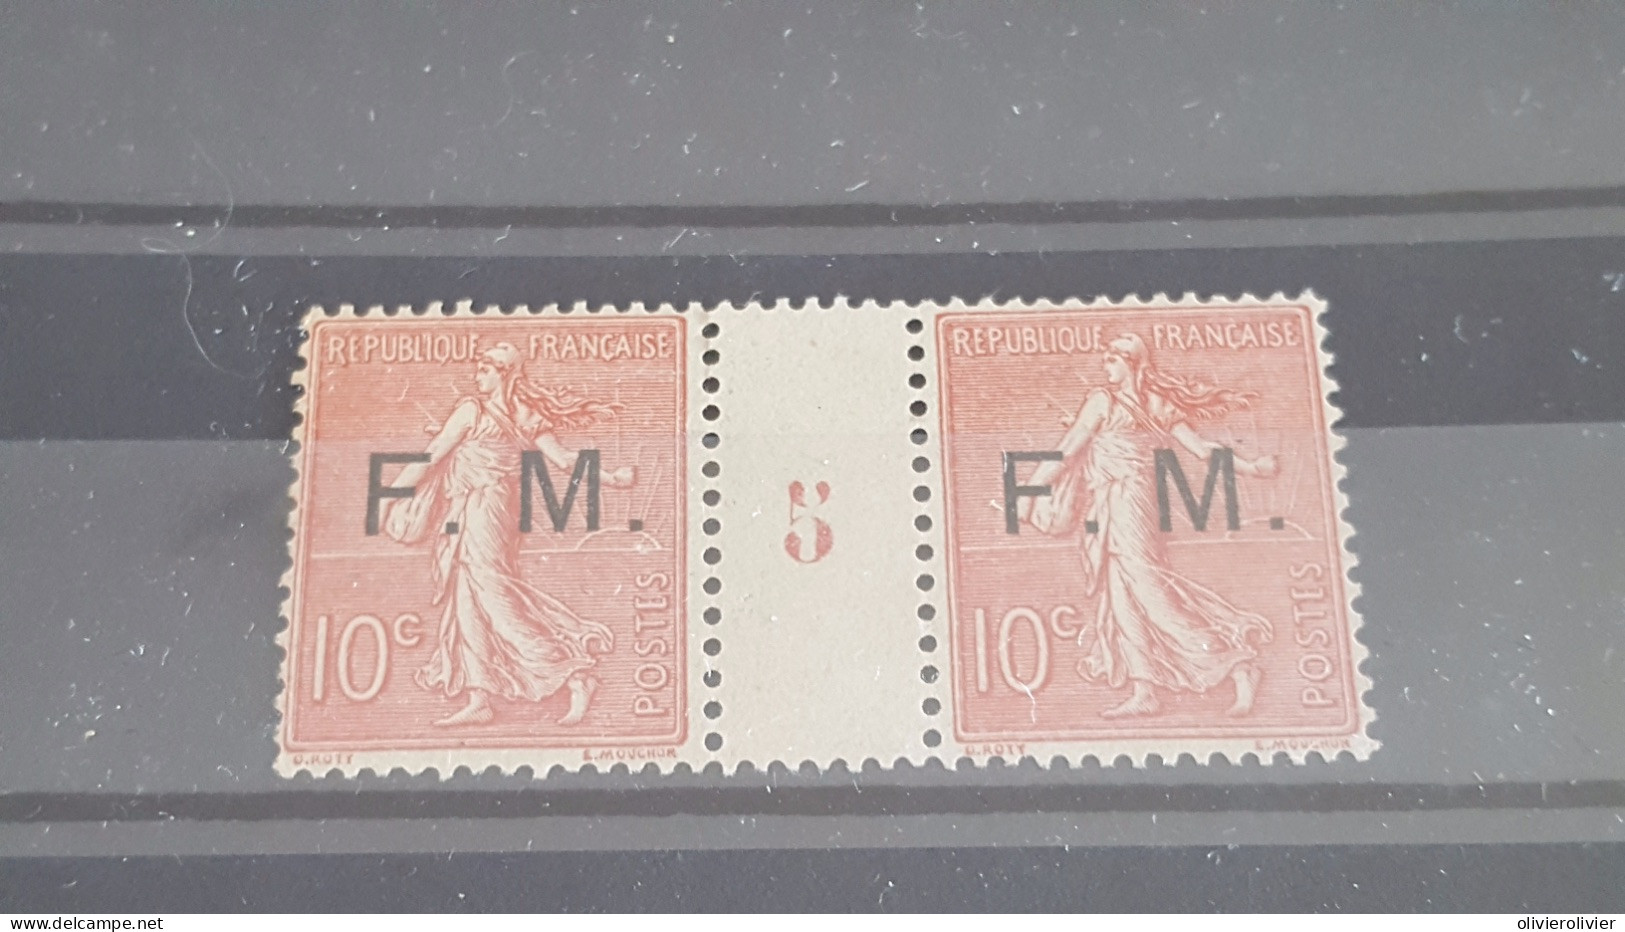 REF A1421 FRANCE NEUF(*) MILLESIMES FM N°5 VALEUR 150 EUROS - Colecciones Completas